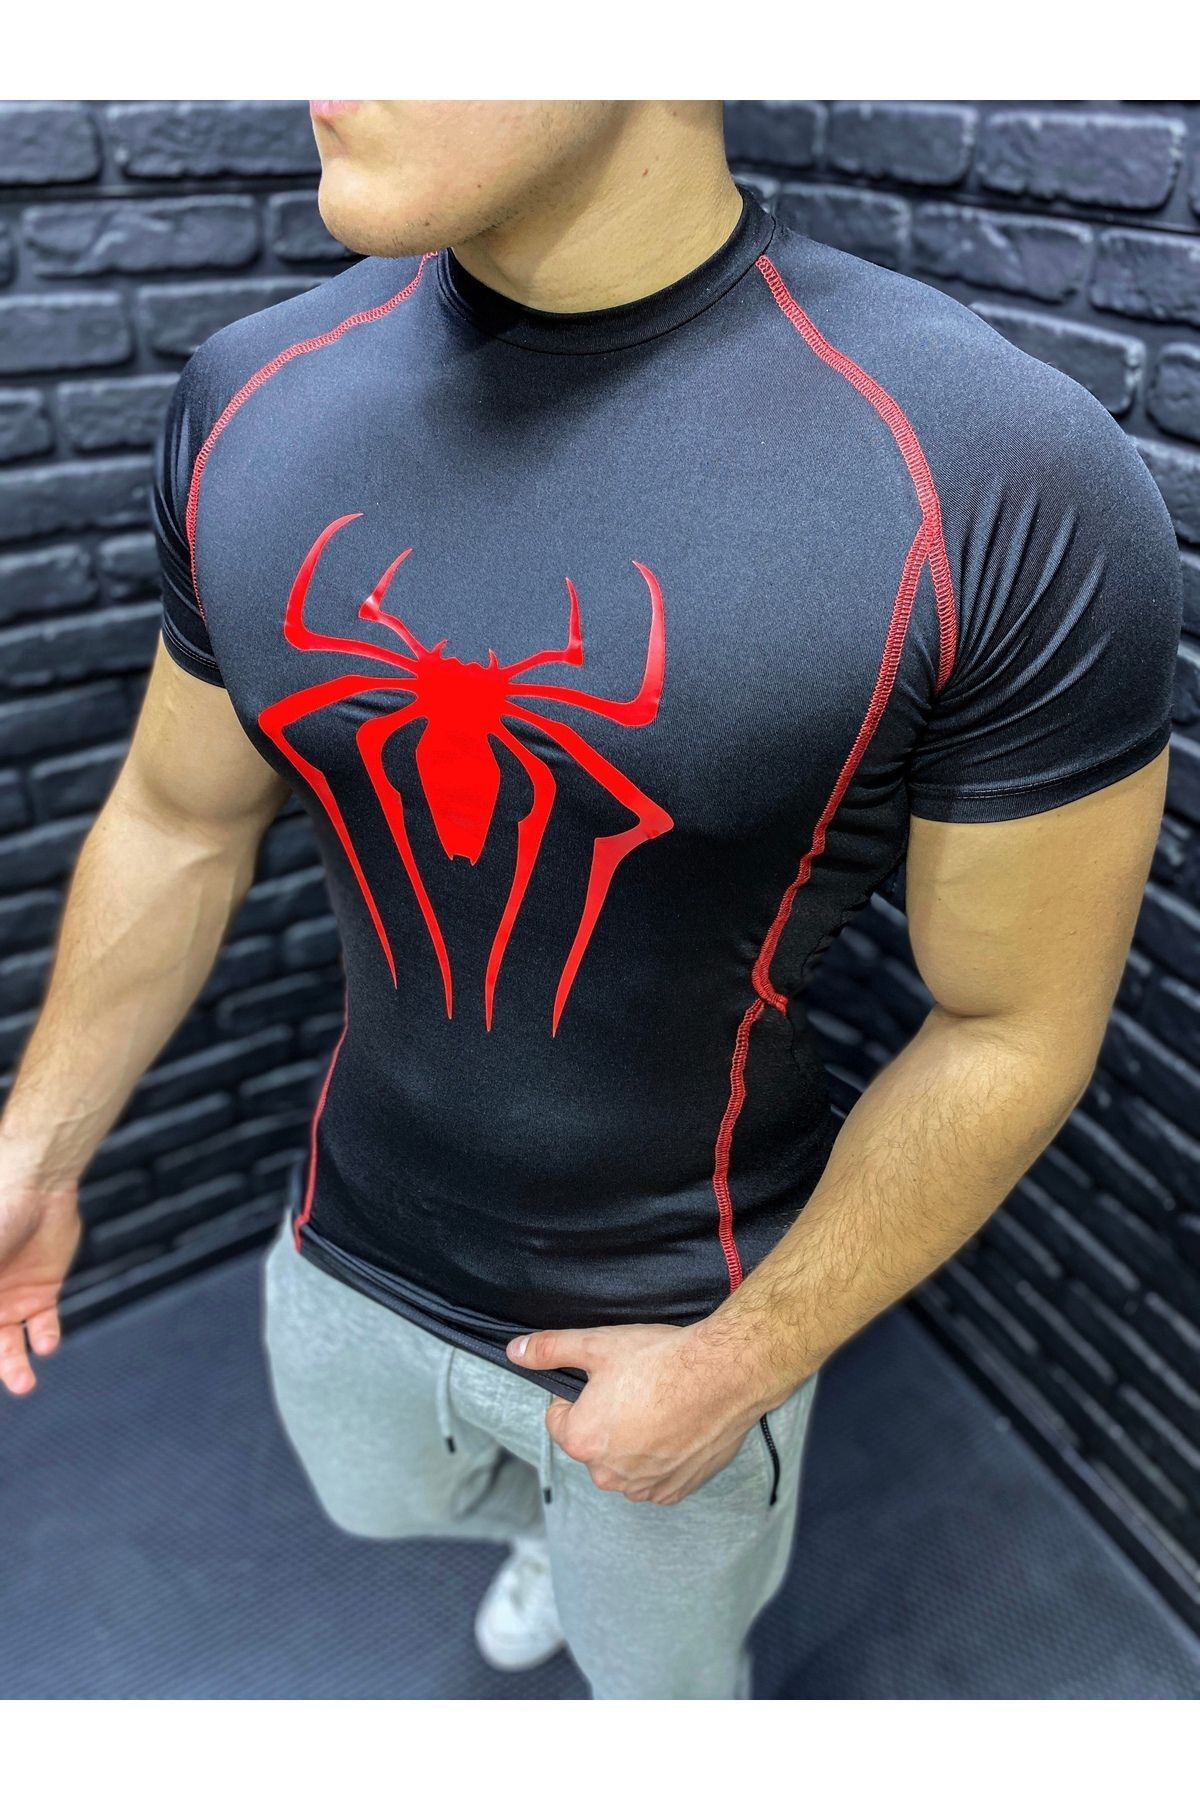 YHM Compression Tshirt Fit Spor Kısa Kollu Vücuda Yapışan Kırmızı Spiderman Baskılı Çizgili Siyah Tişört